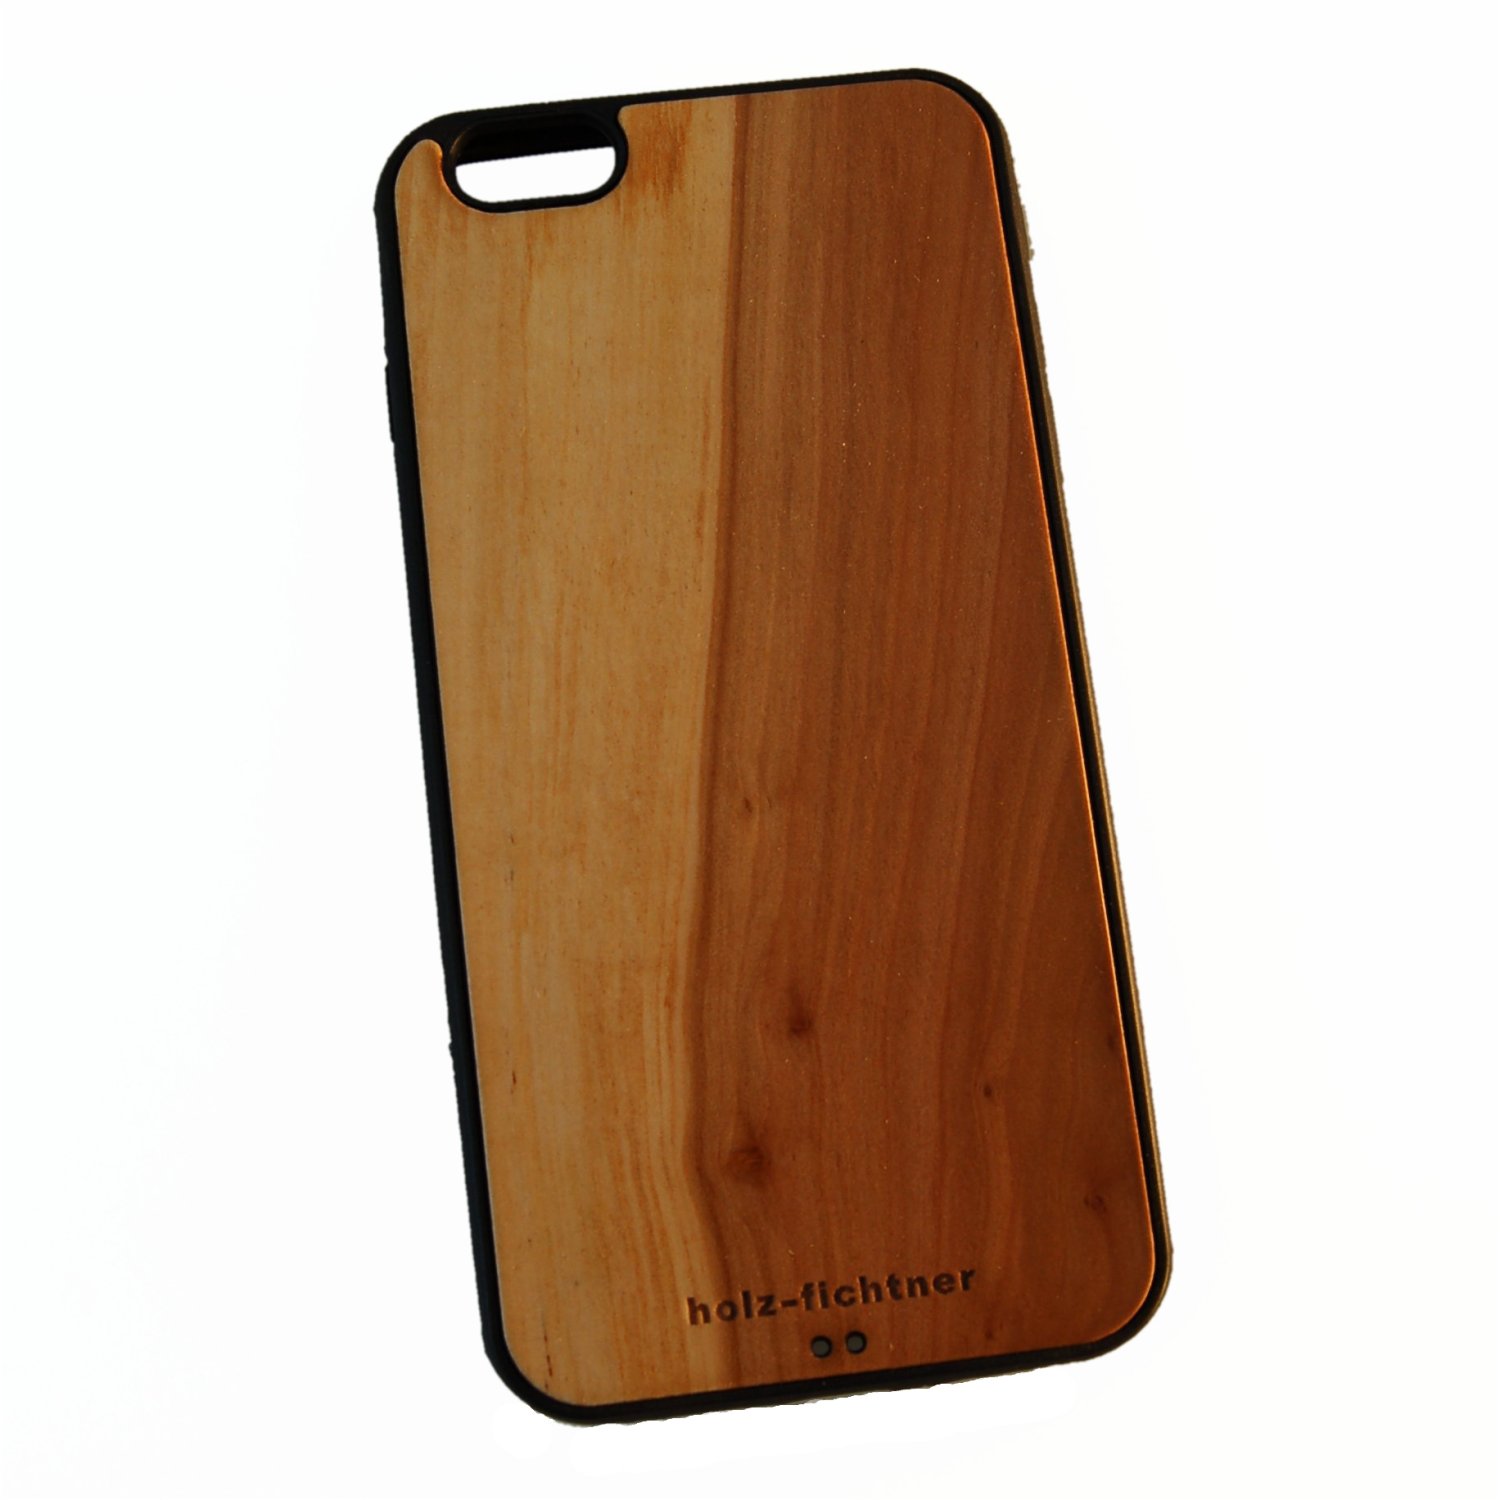 Holzcover für IPhone 6+, Apfelholz